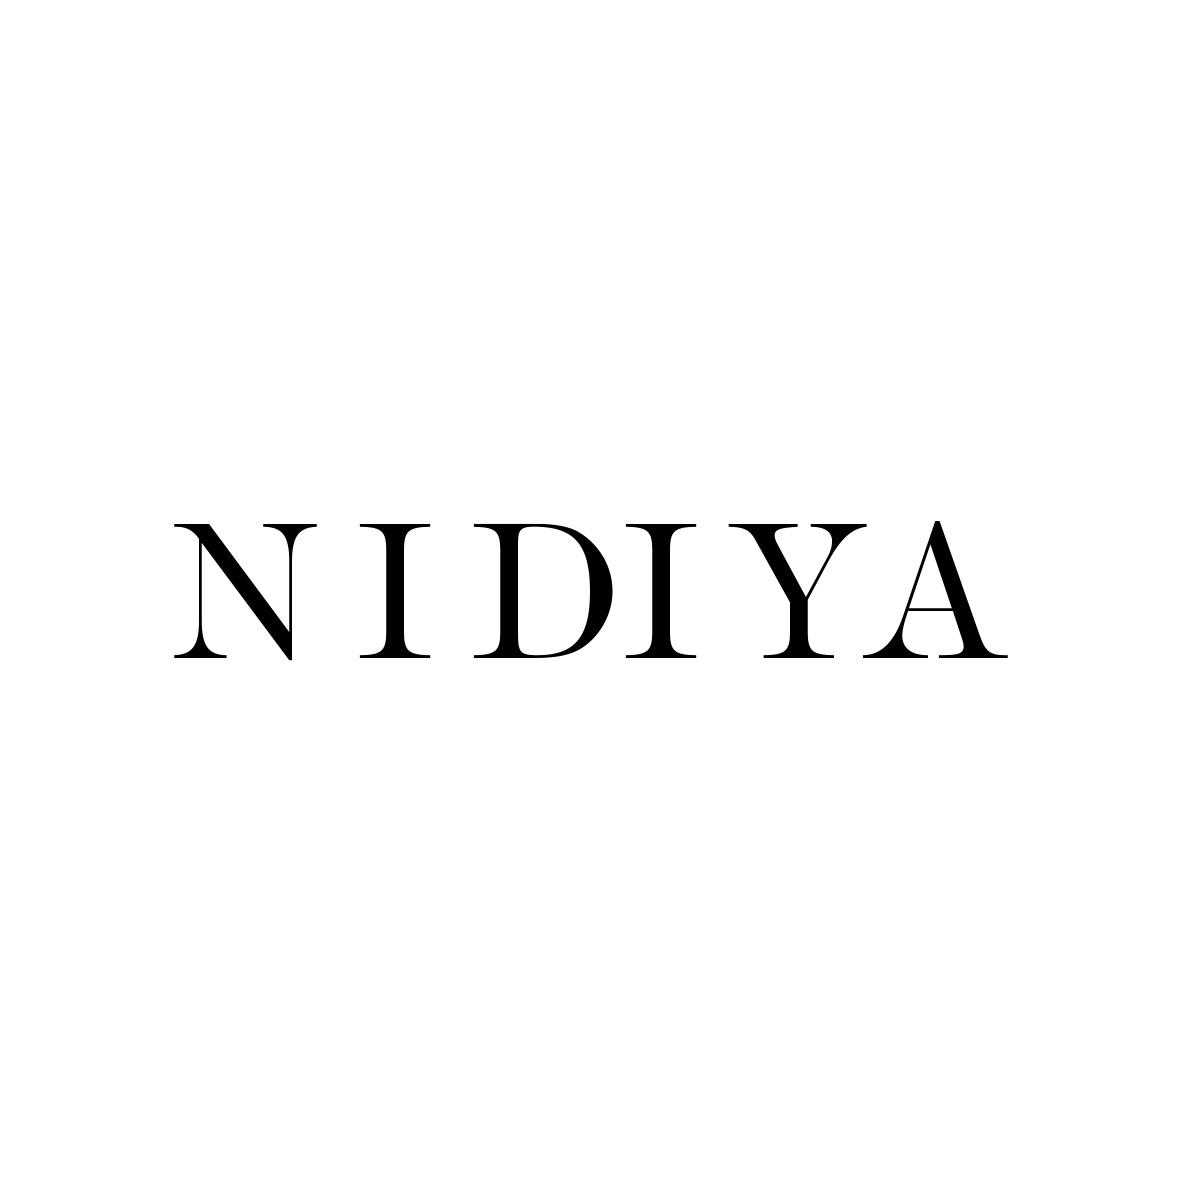 NIDIYA